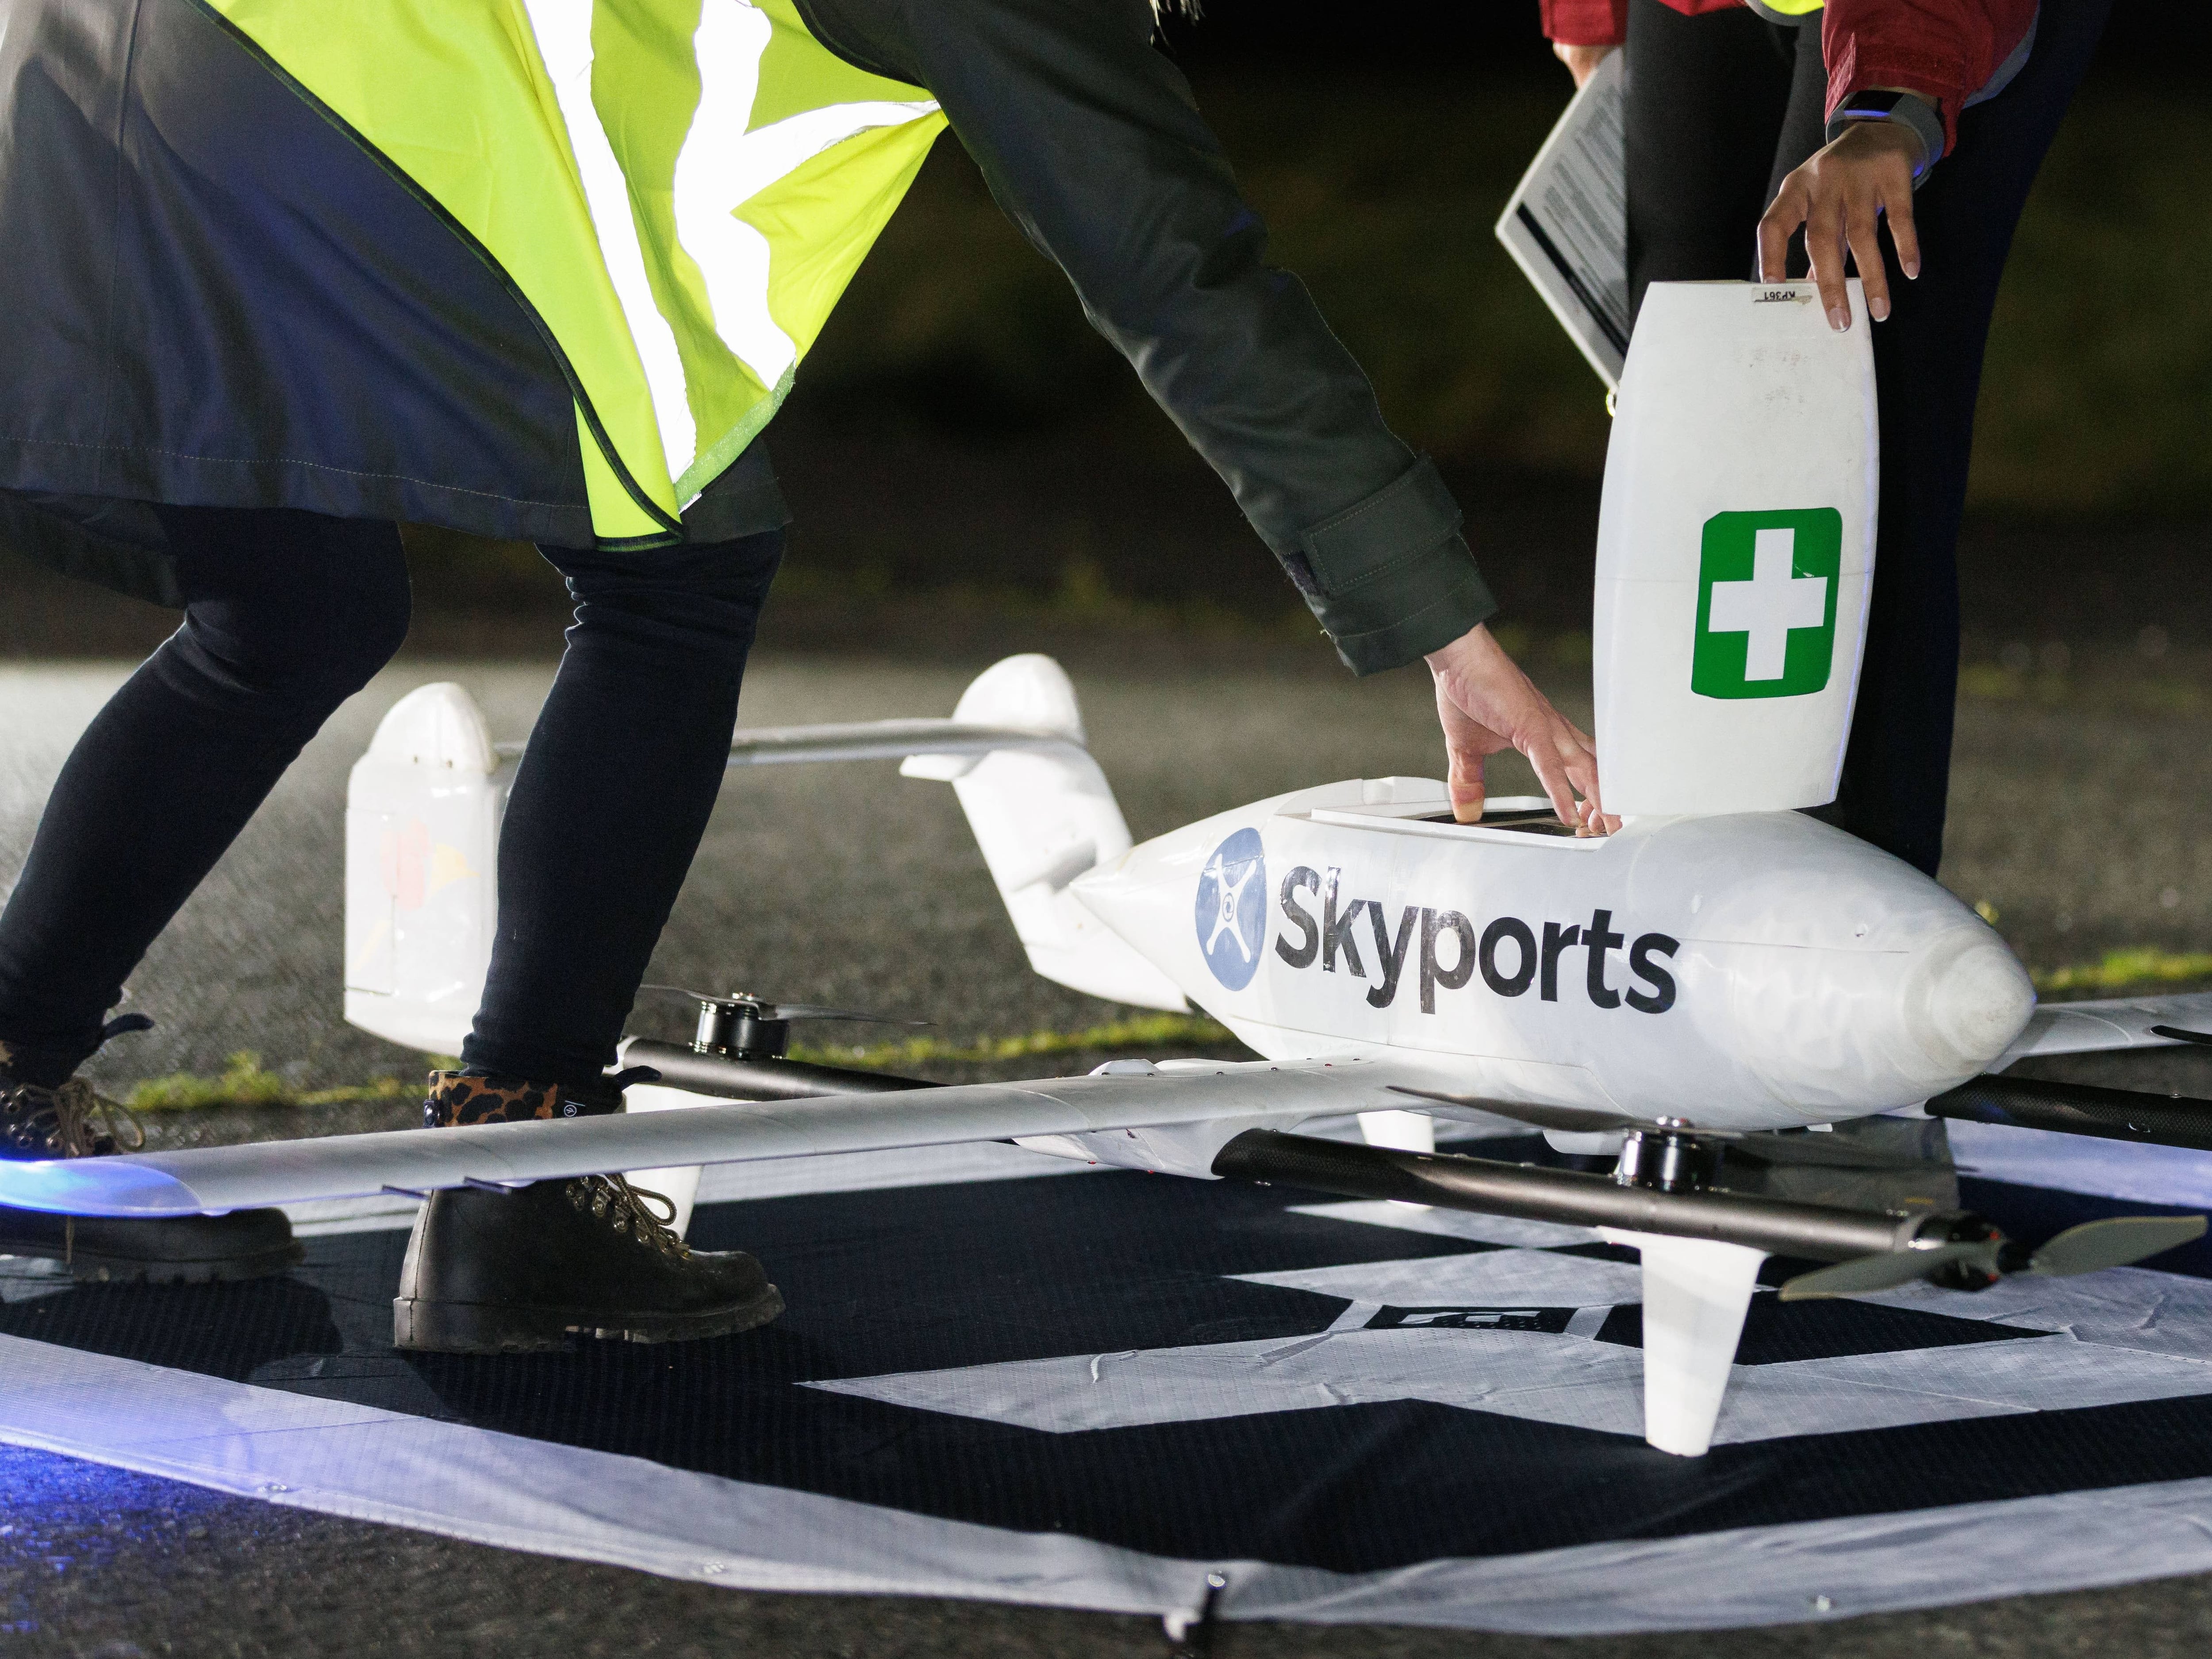 Drones to deliver defibrillators to treat cardiac arrest patients in trial